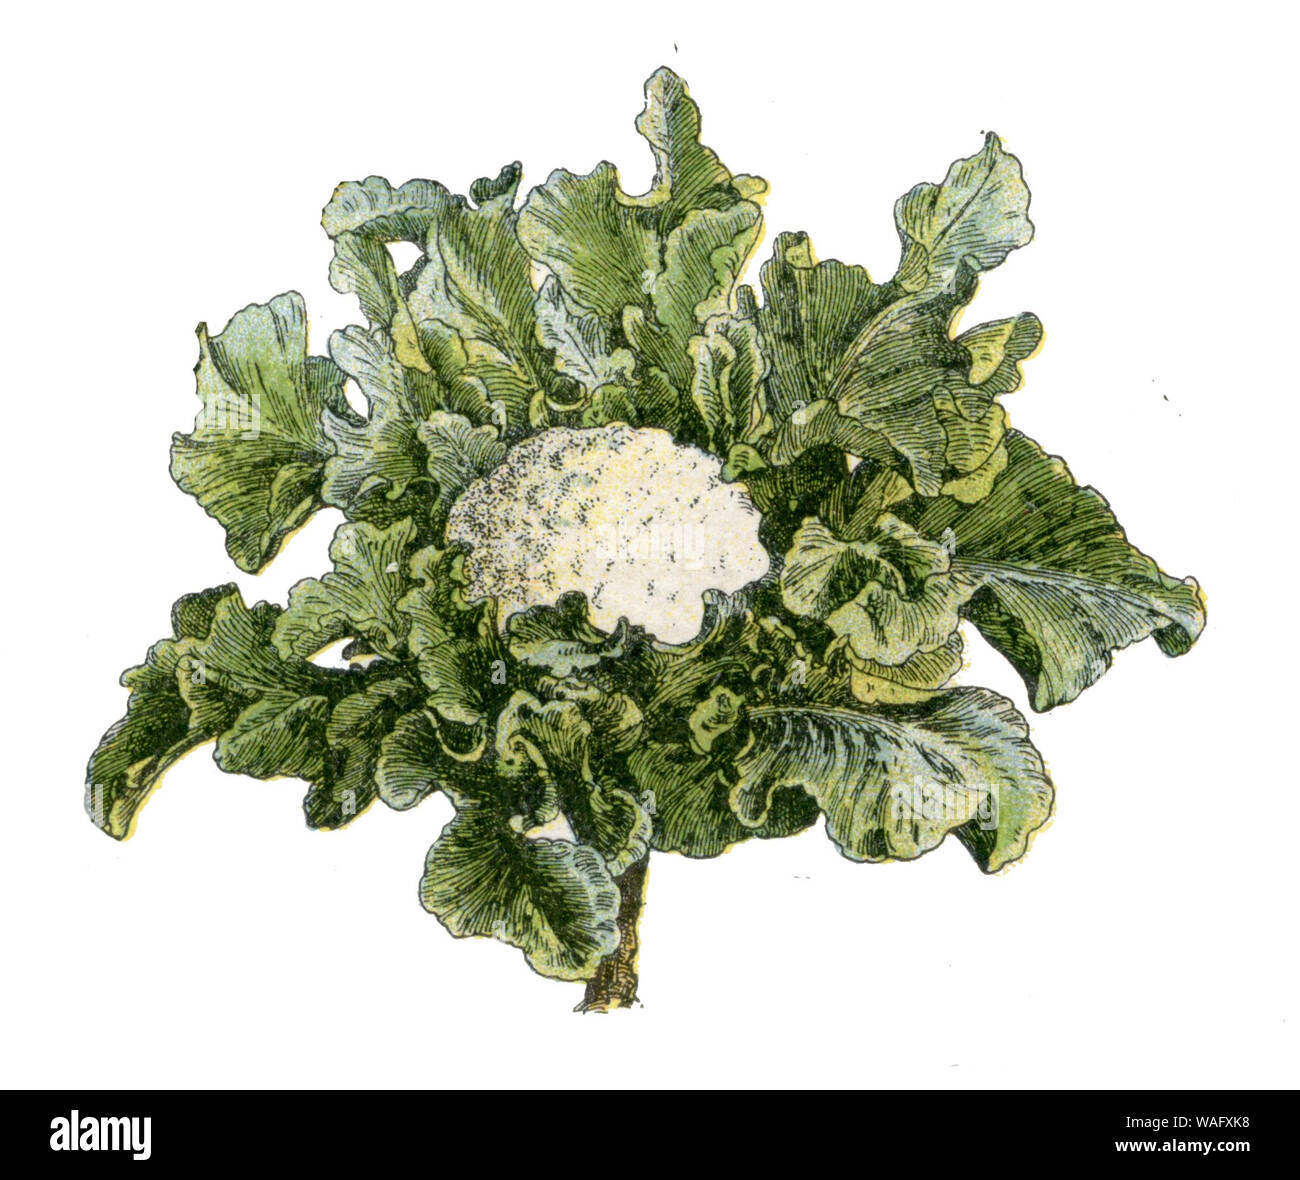 cauliflower , Millot, Adolphe (1857-1921) (encyclopedia, 1910) Stock Photo